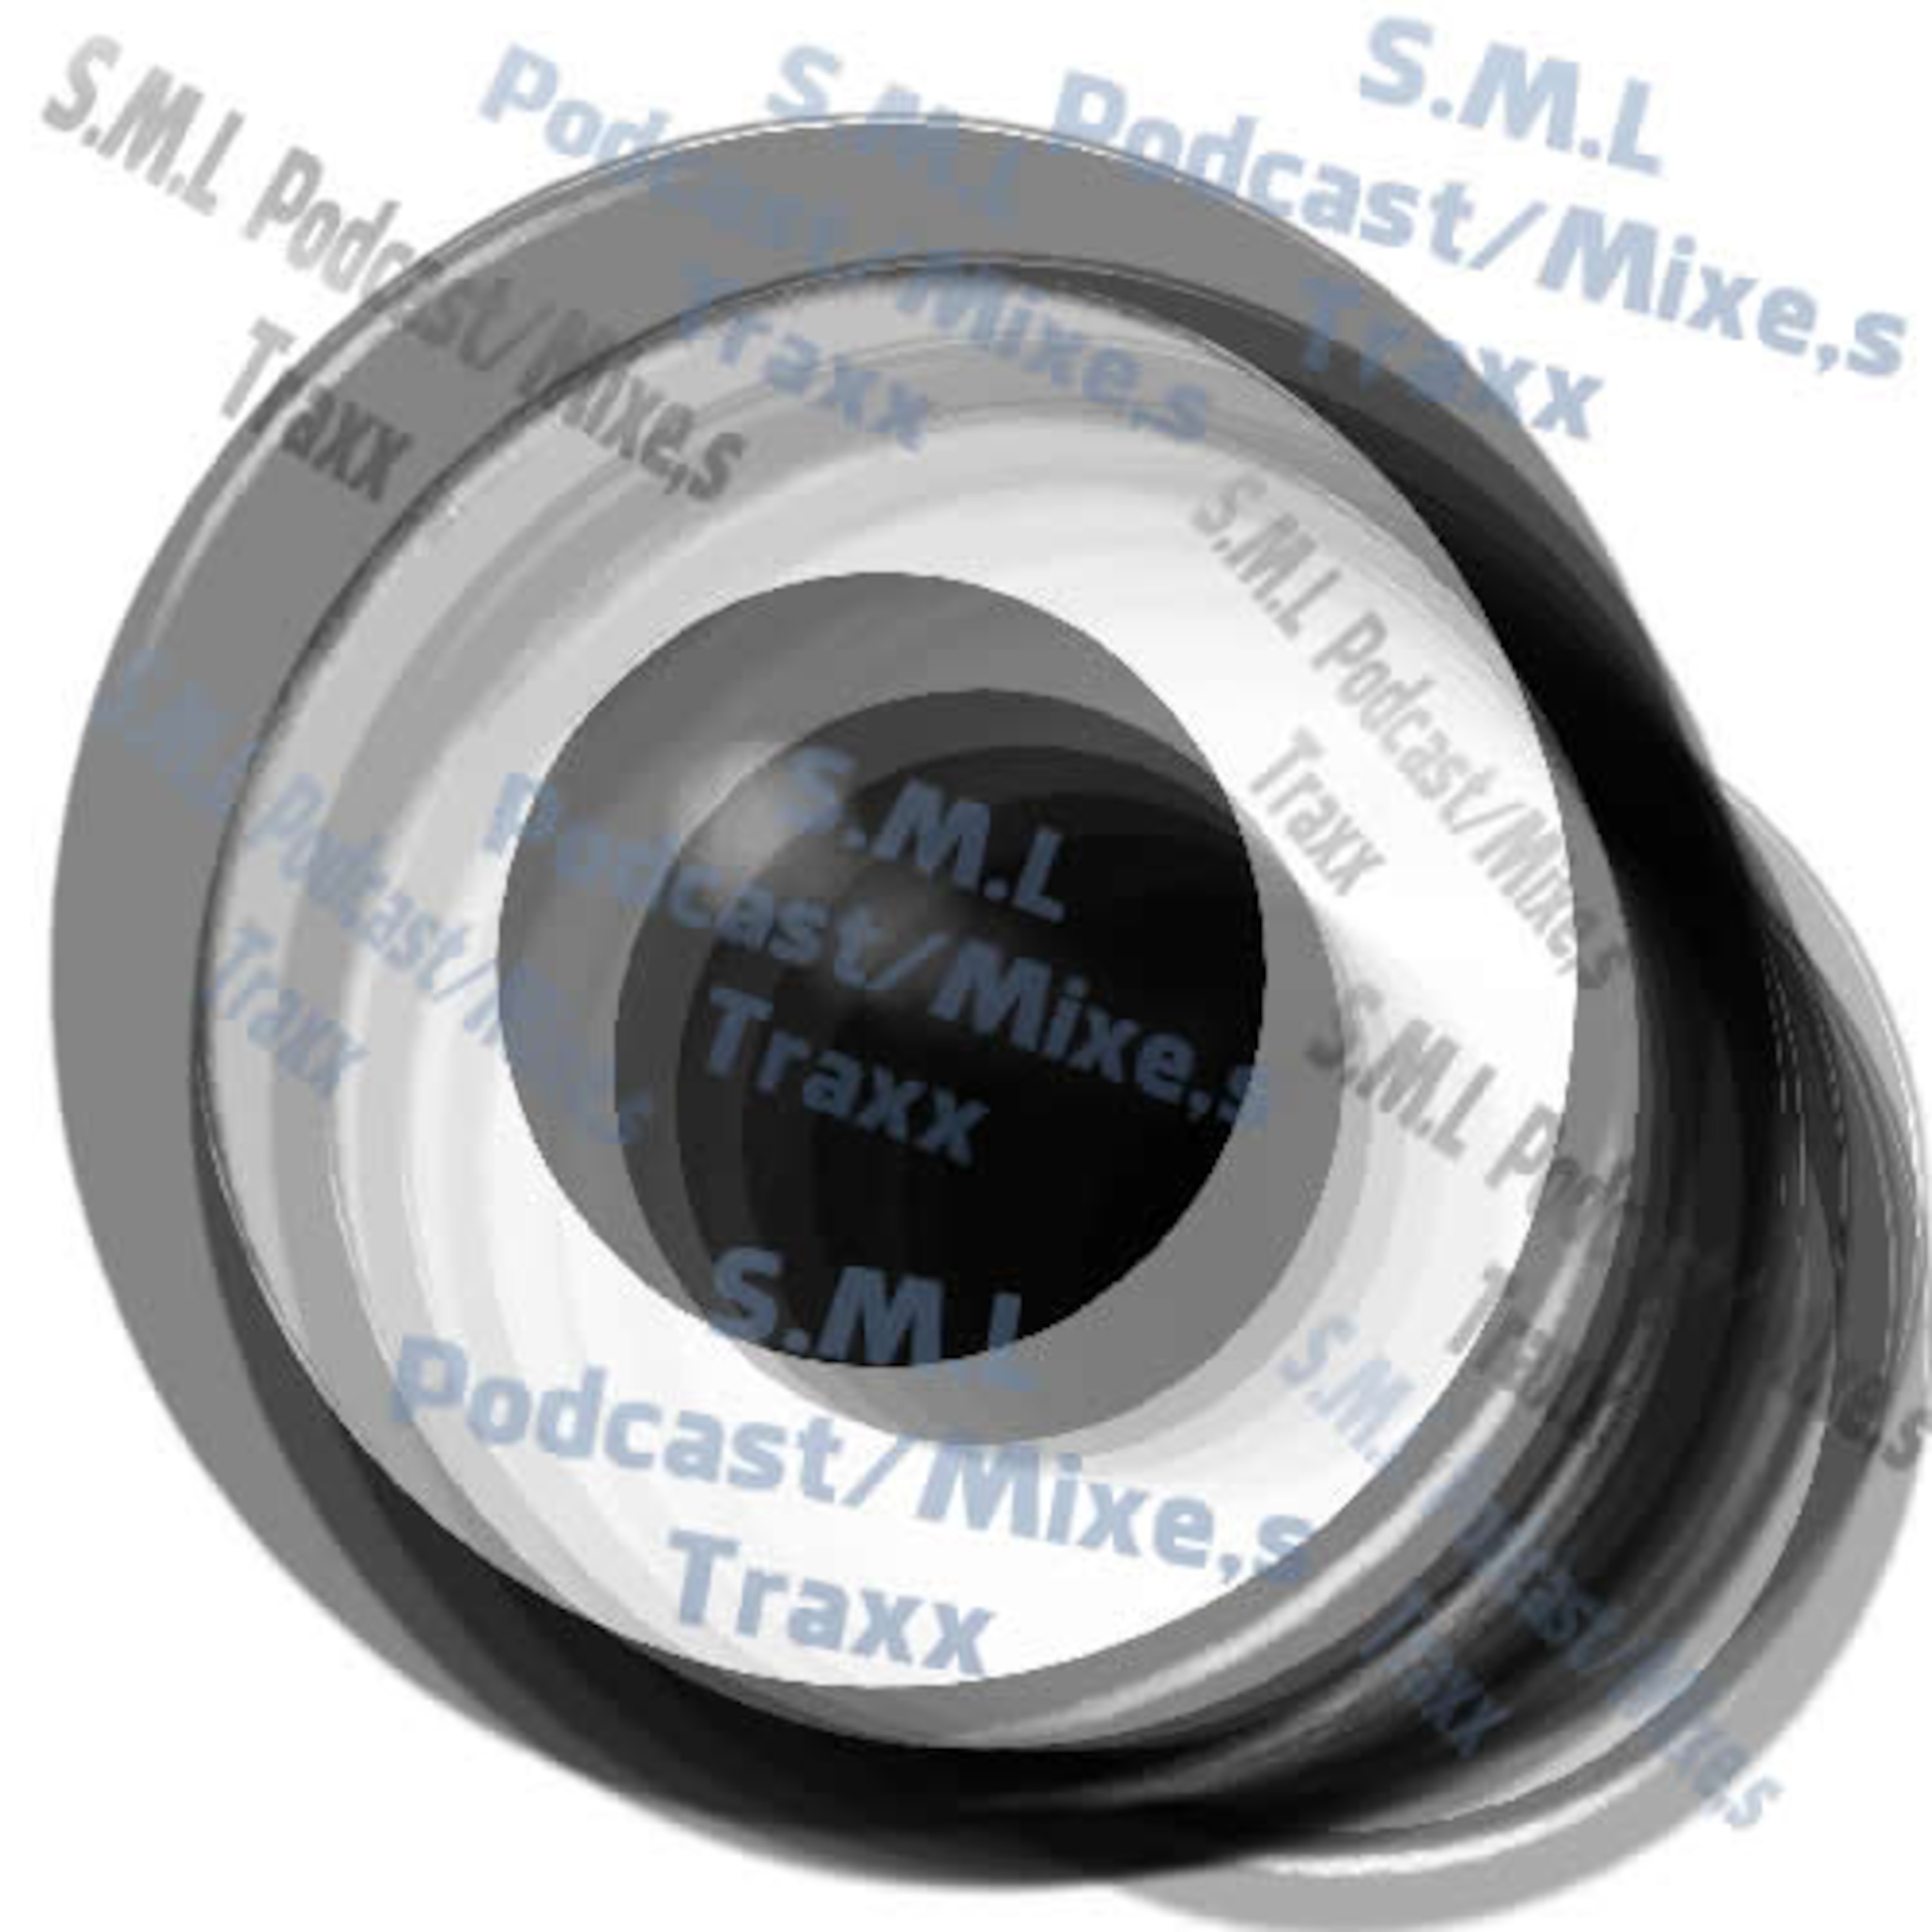 S.M.L Podcast